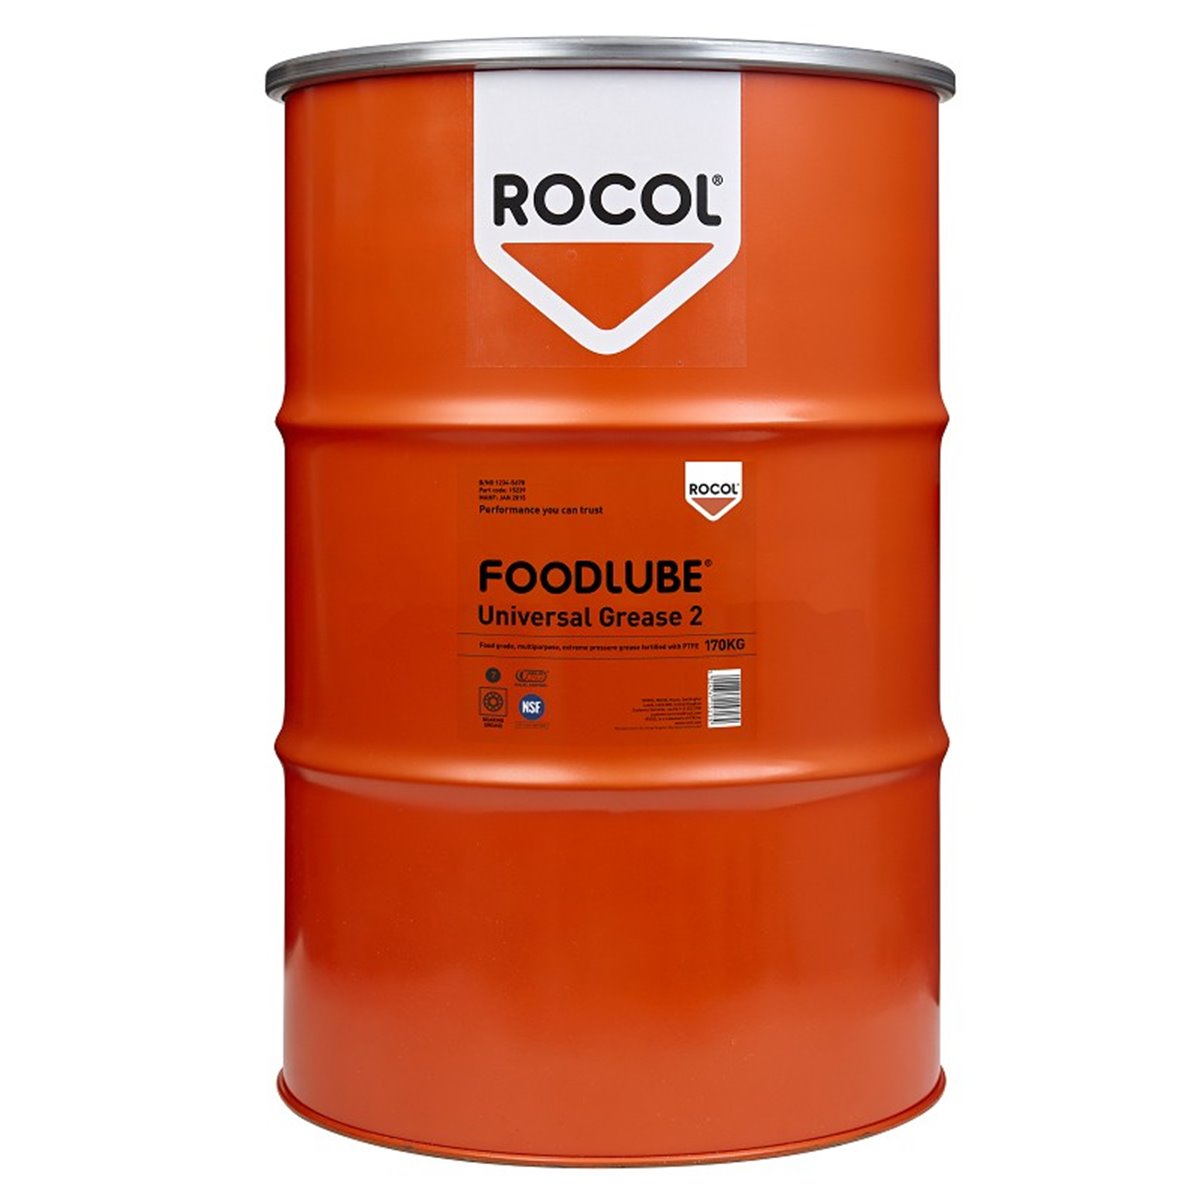 FOODLUBE Universal 2 Rocol 170kg RS15239